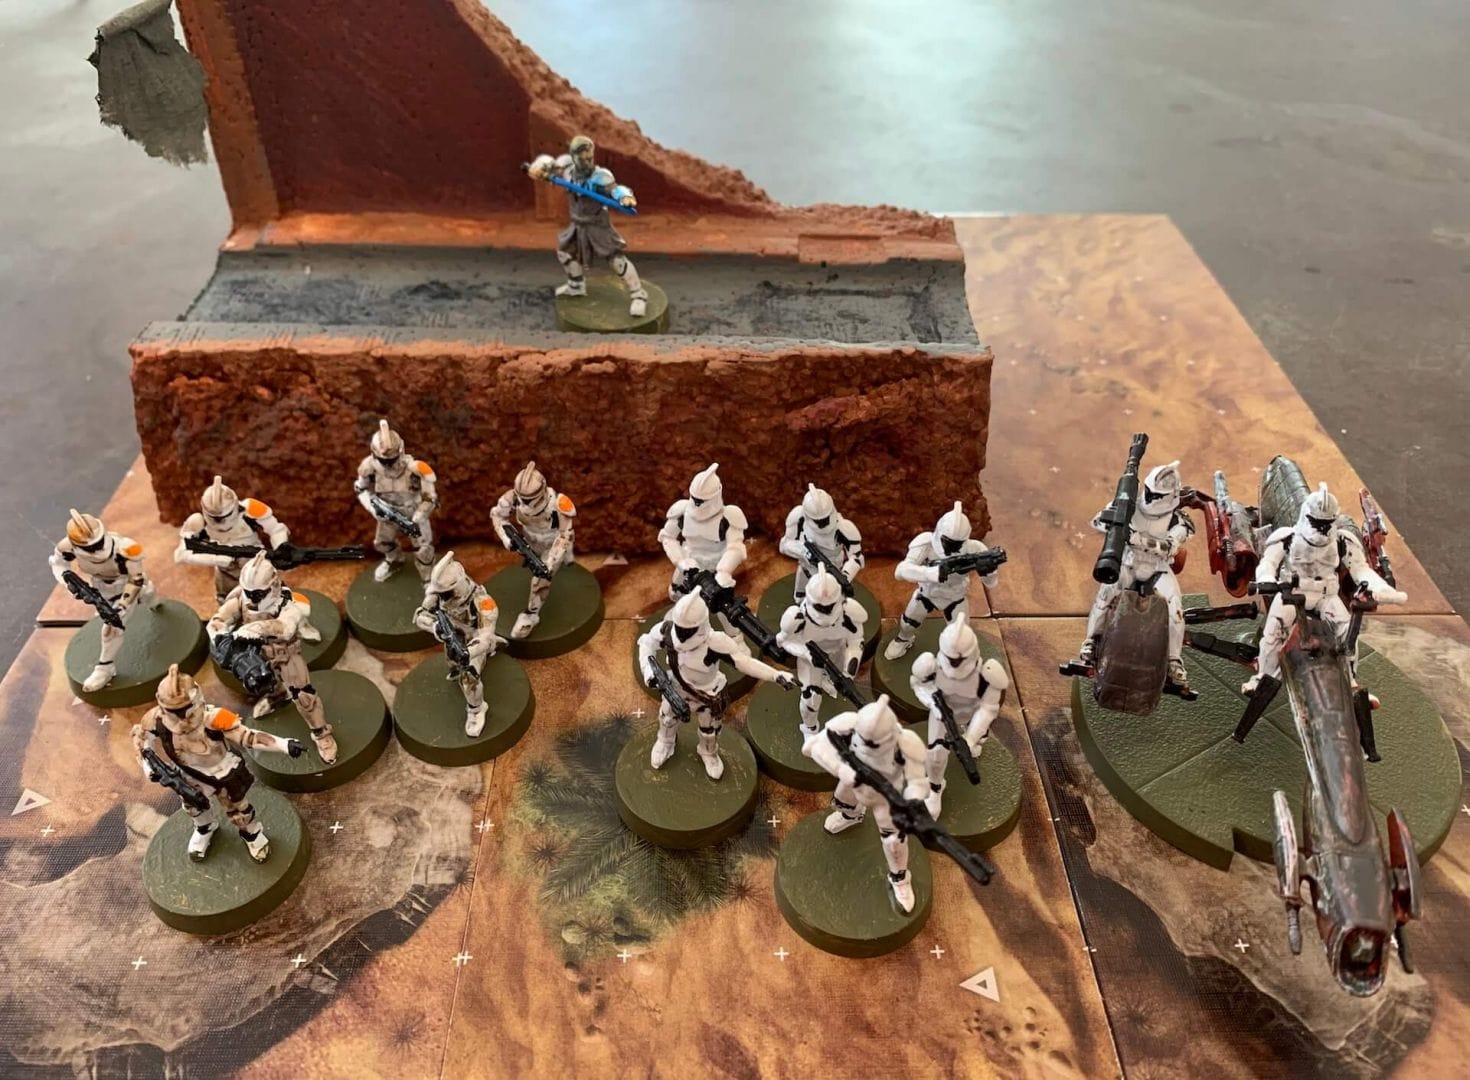 General Kenobi leads a fighting unit of Republic Clone Troopers in Star Wars: Legion.